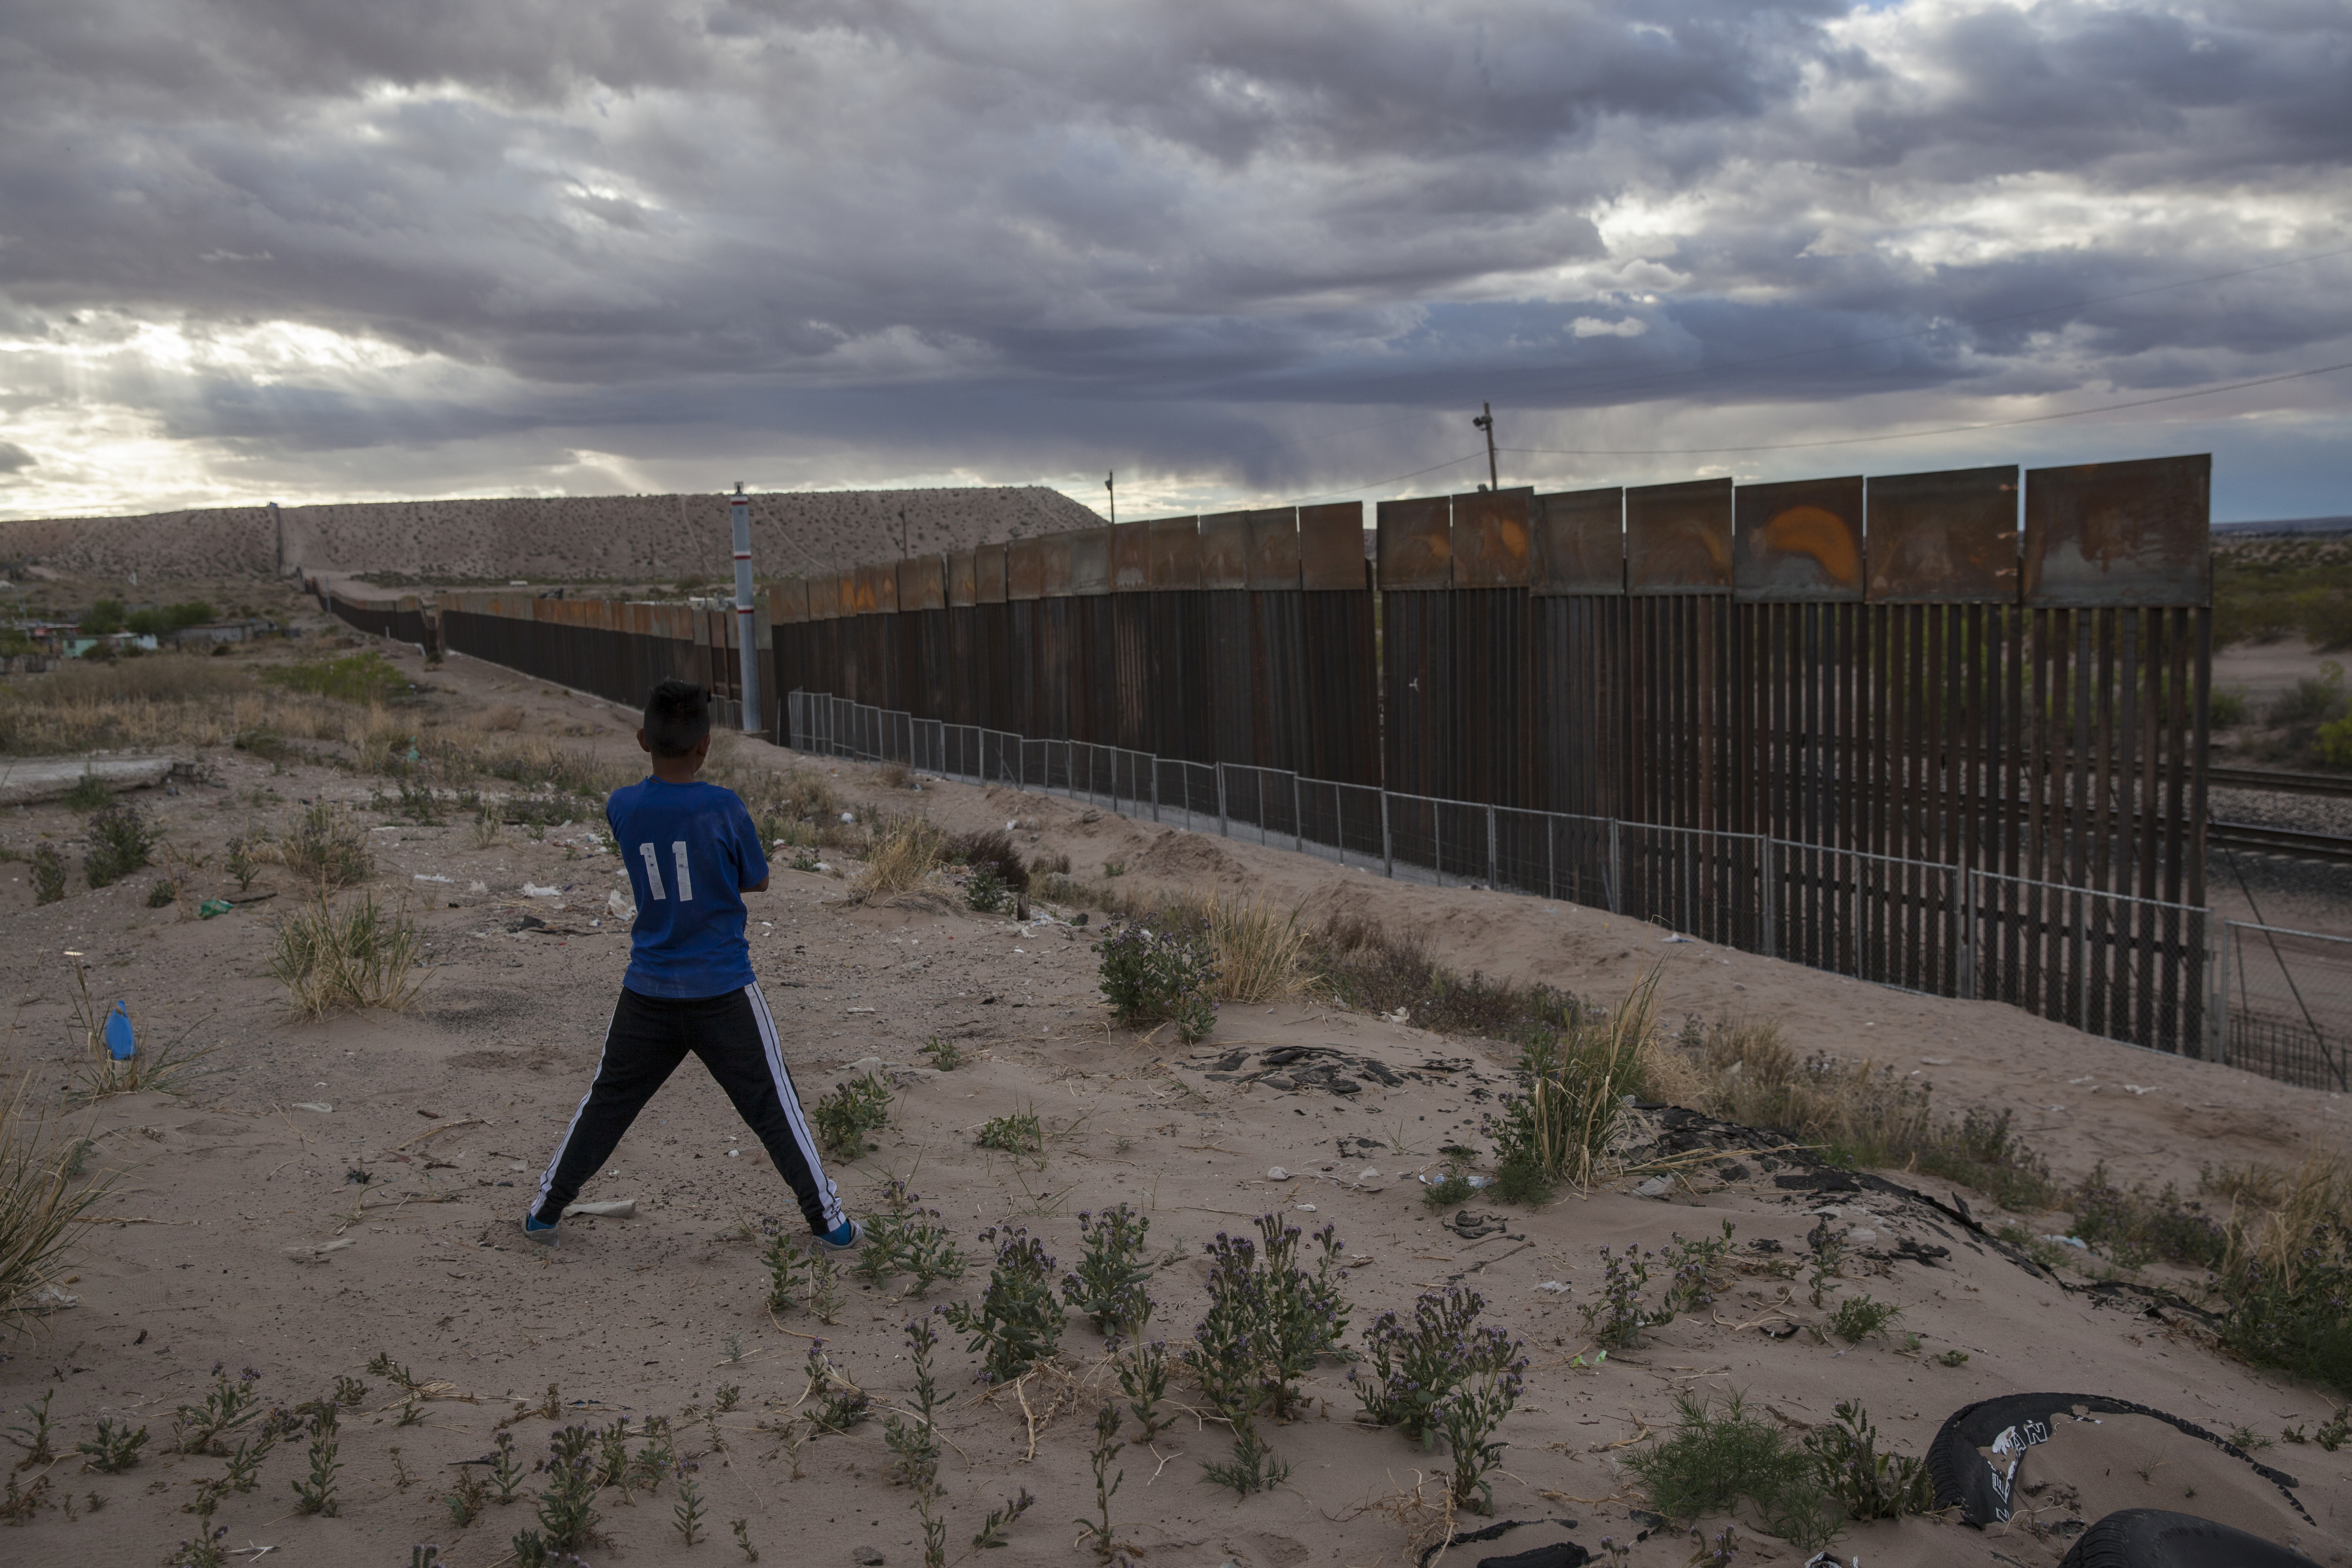 Abren puerta de la frontera San Diego-Tijuana para familias separadas